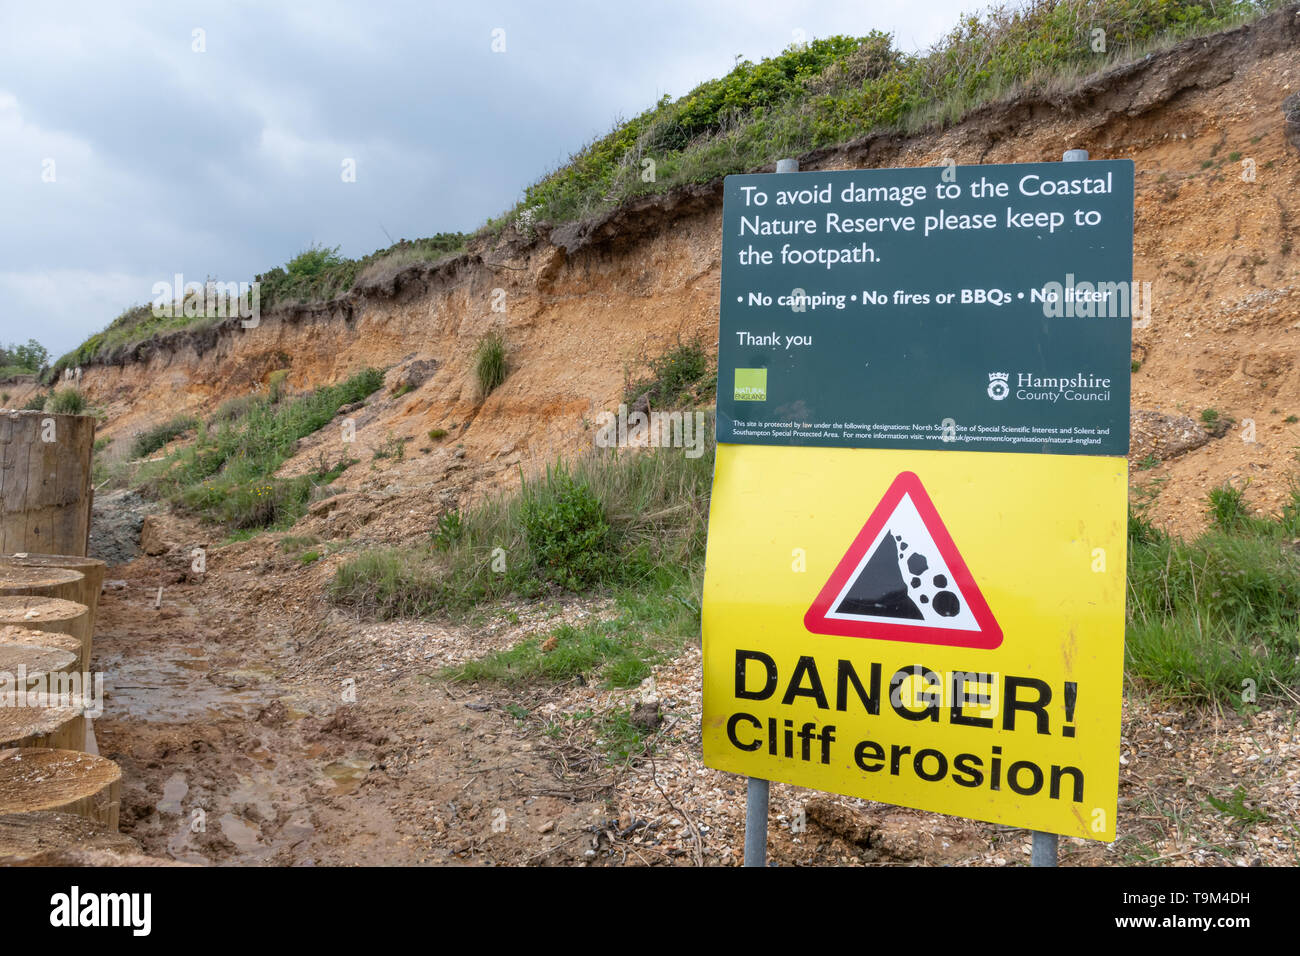 Danger Cliff Erosion Sign warning of hazardous rock falls at Lepe Beach, Hampshire, UK Stock Photo